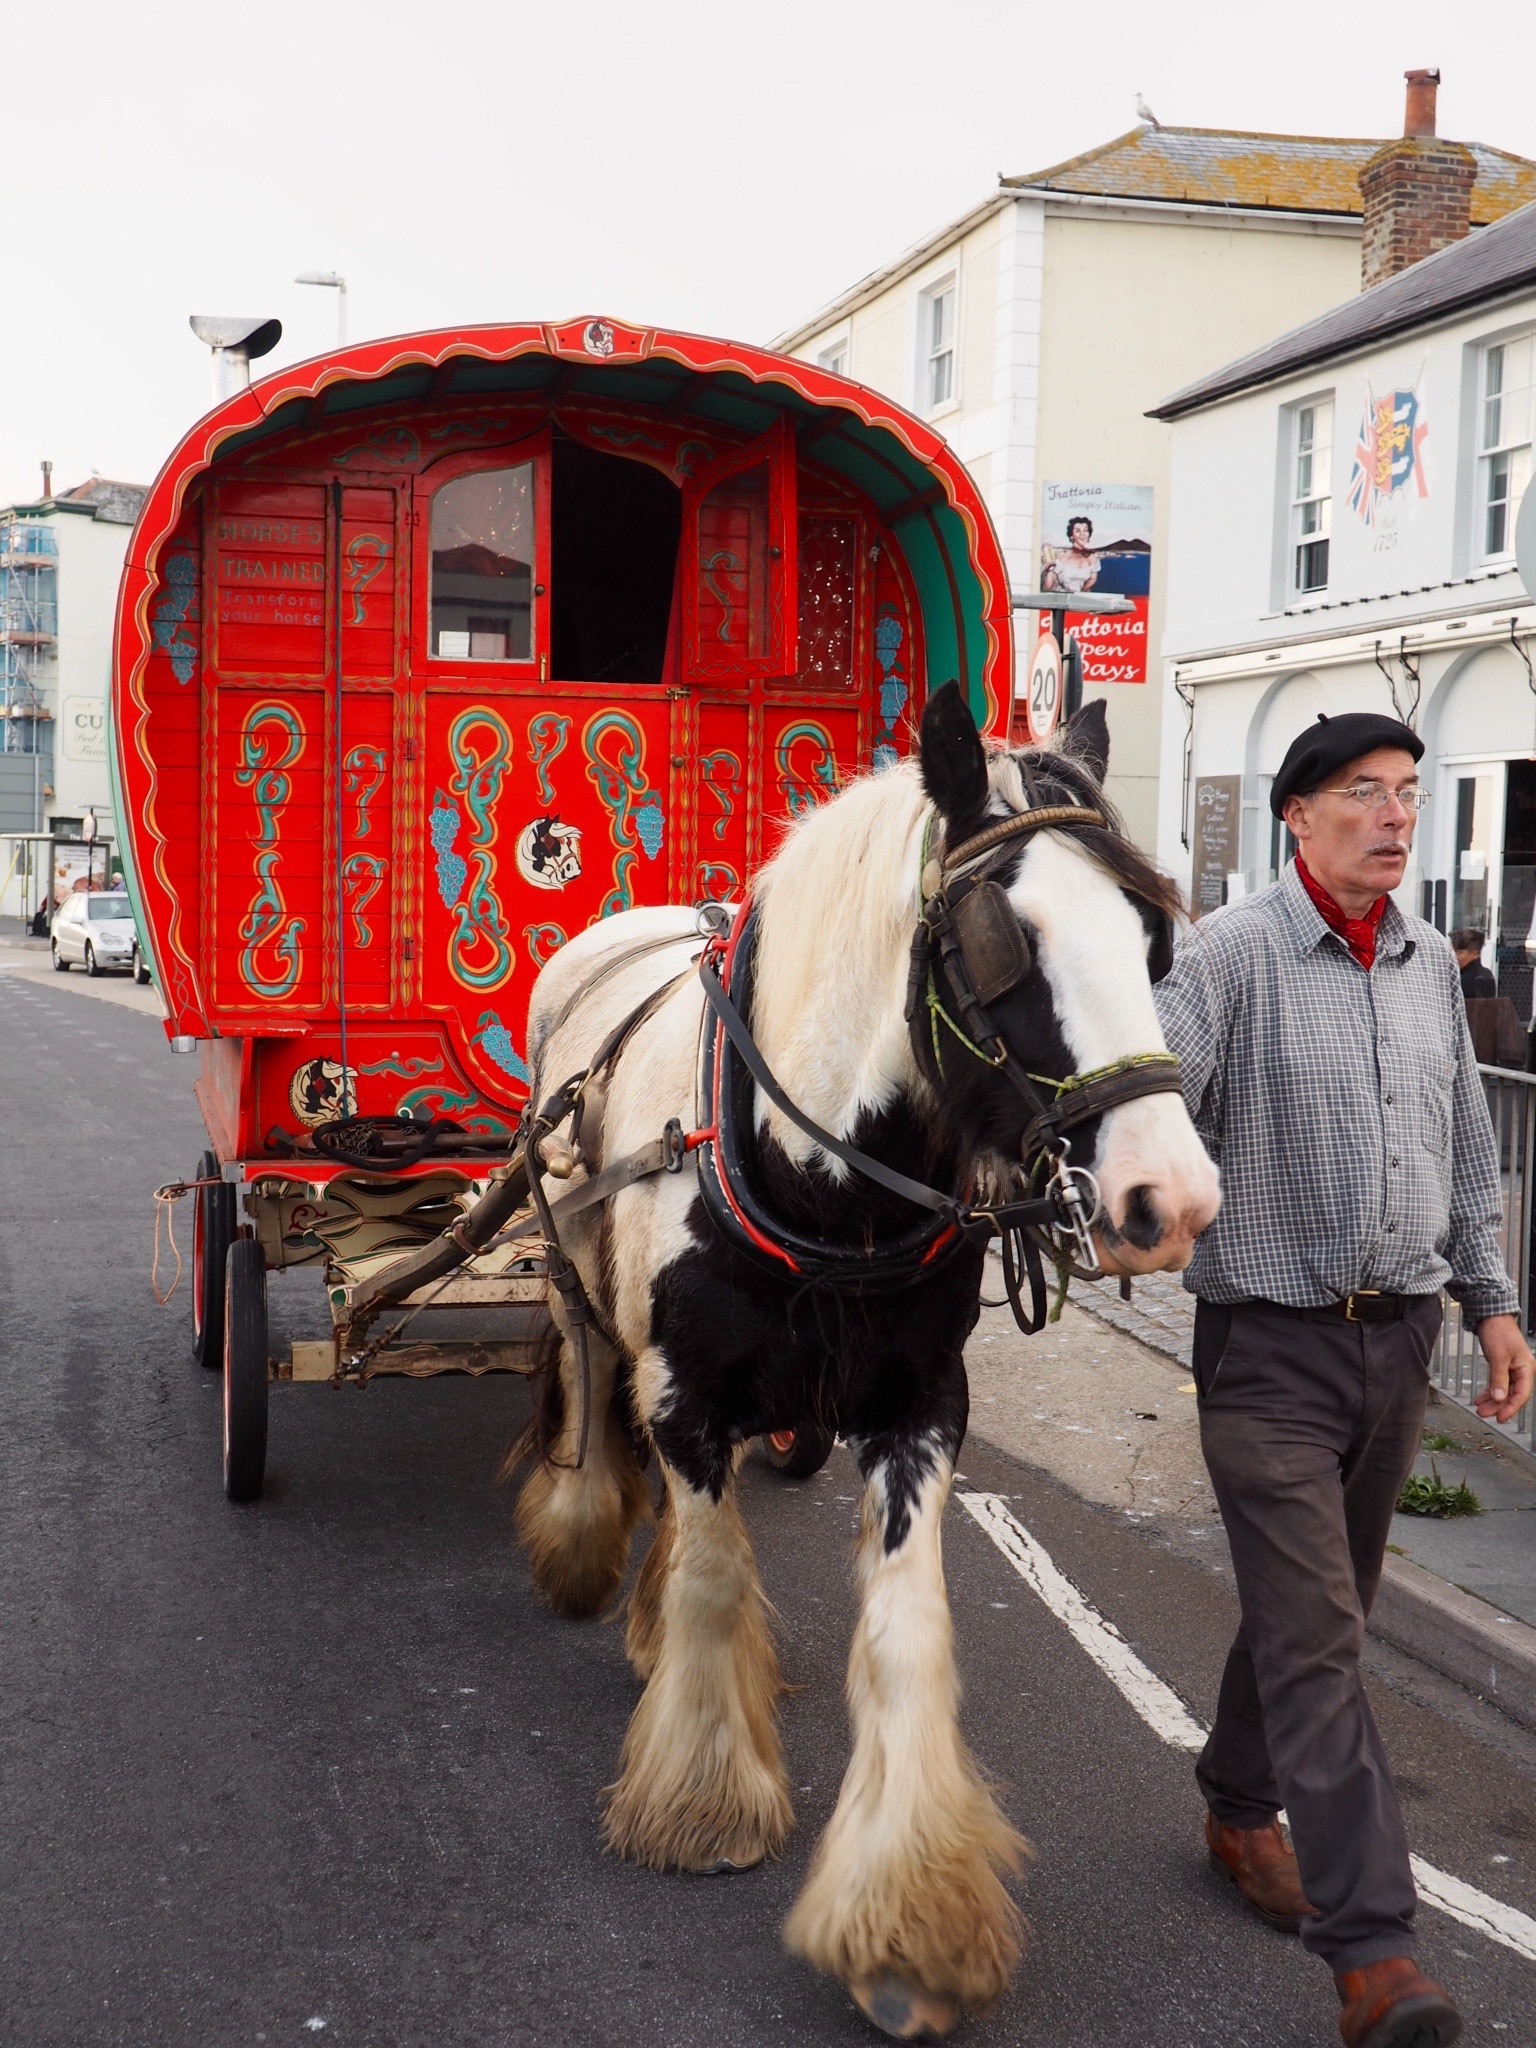 Horse & cart in Hastings.